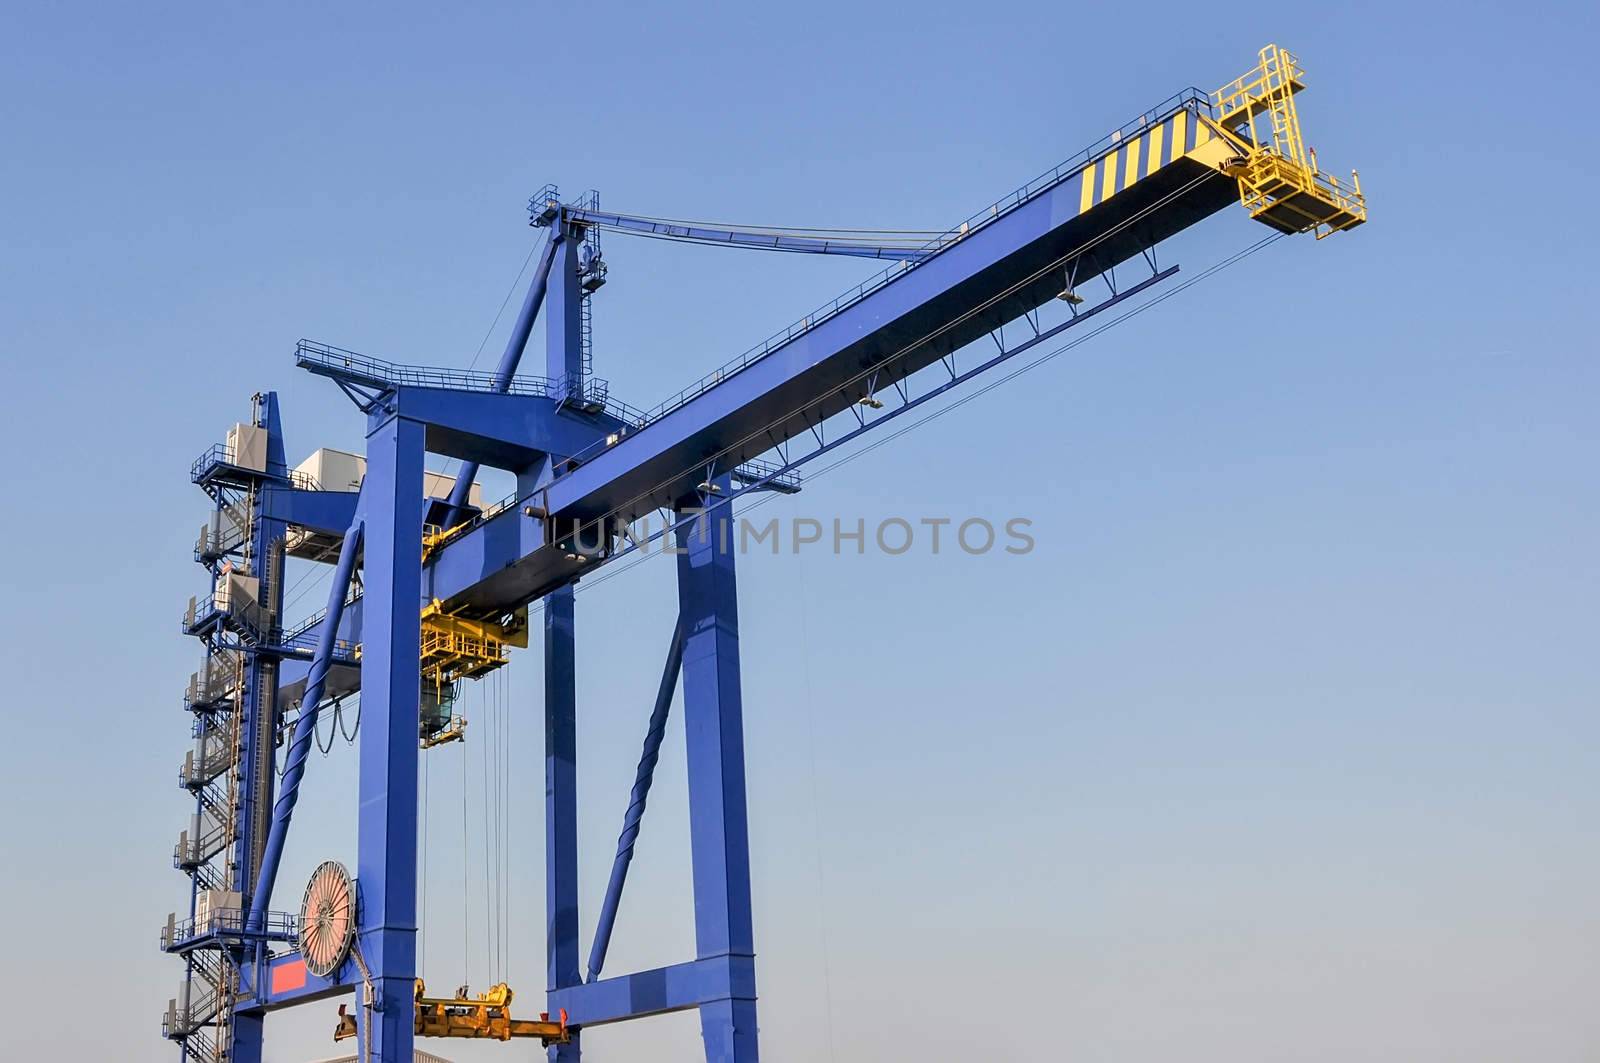 large cranes in sea cargo port of Rotterdam